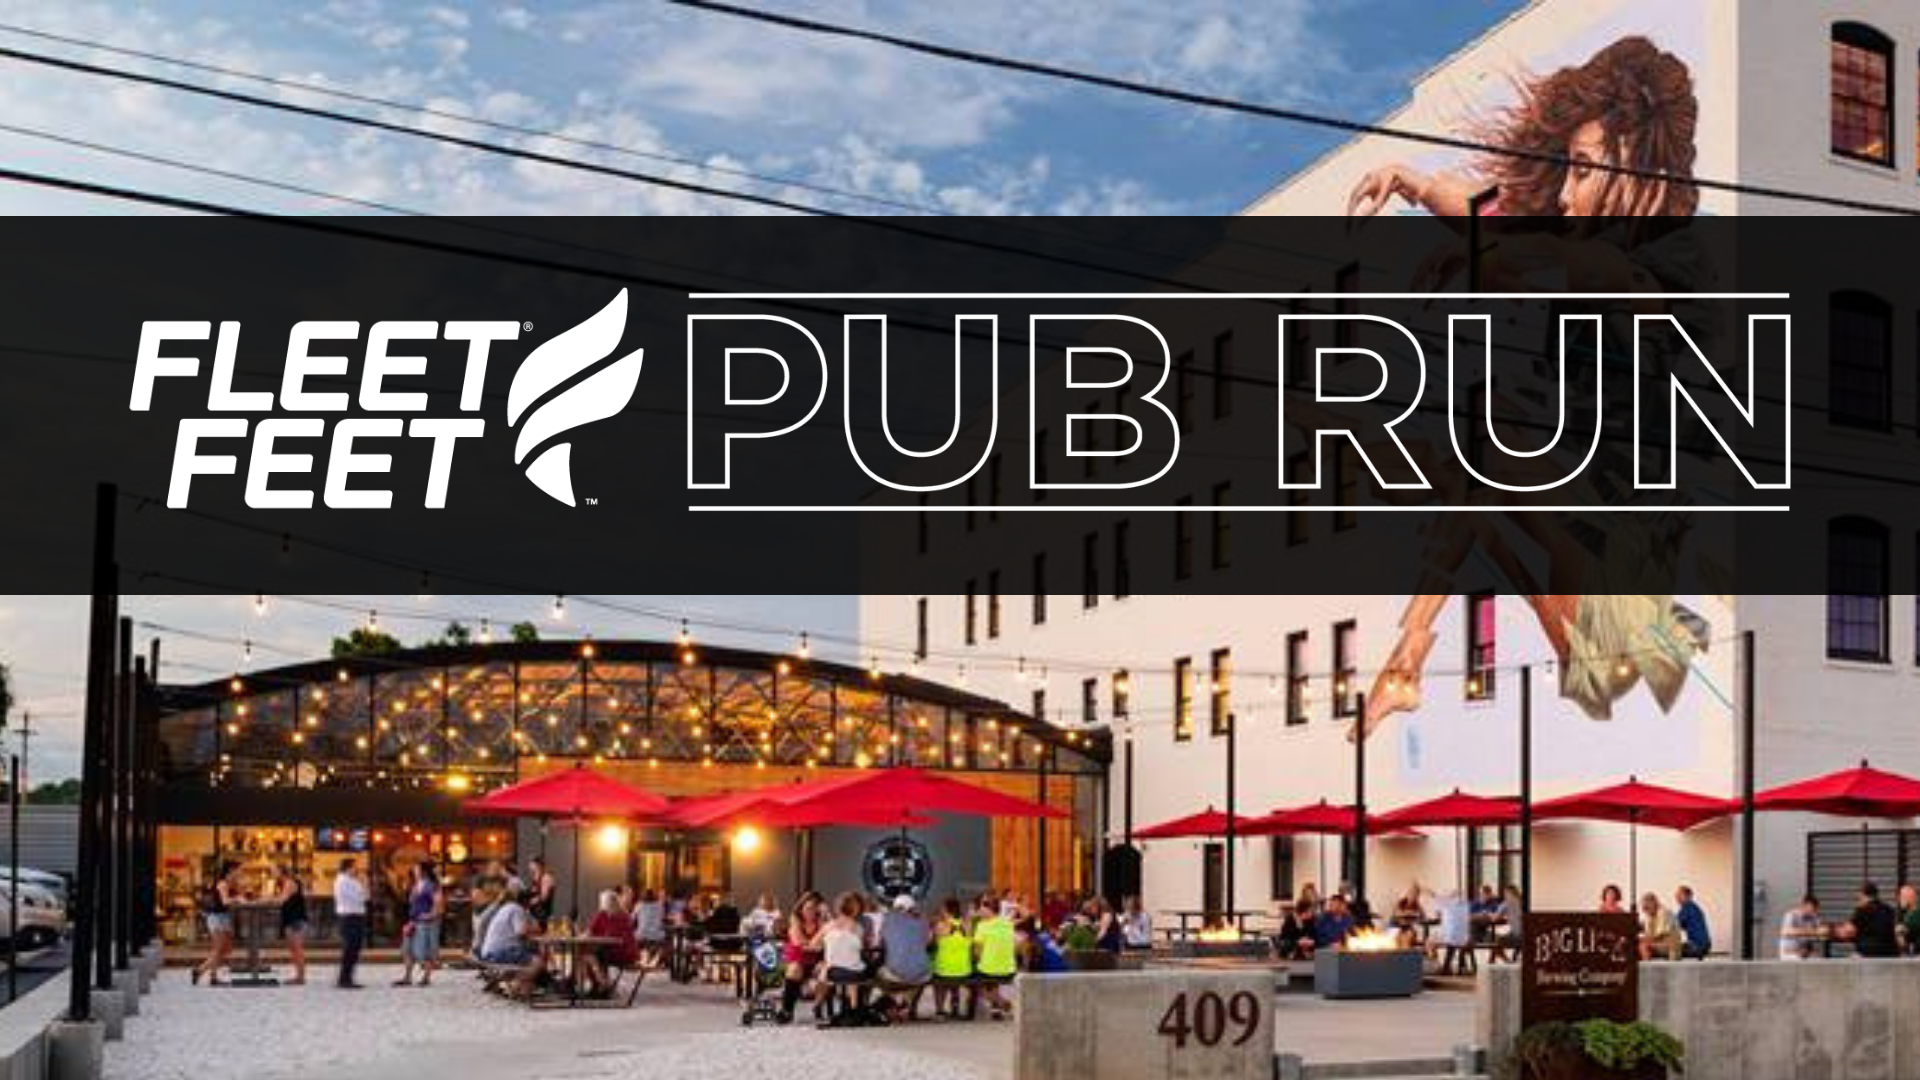 Pub Run \u0026 Walk - Fleet Feet Sports Roanoke